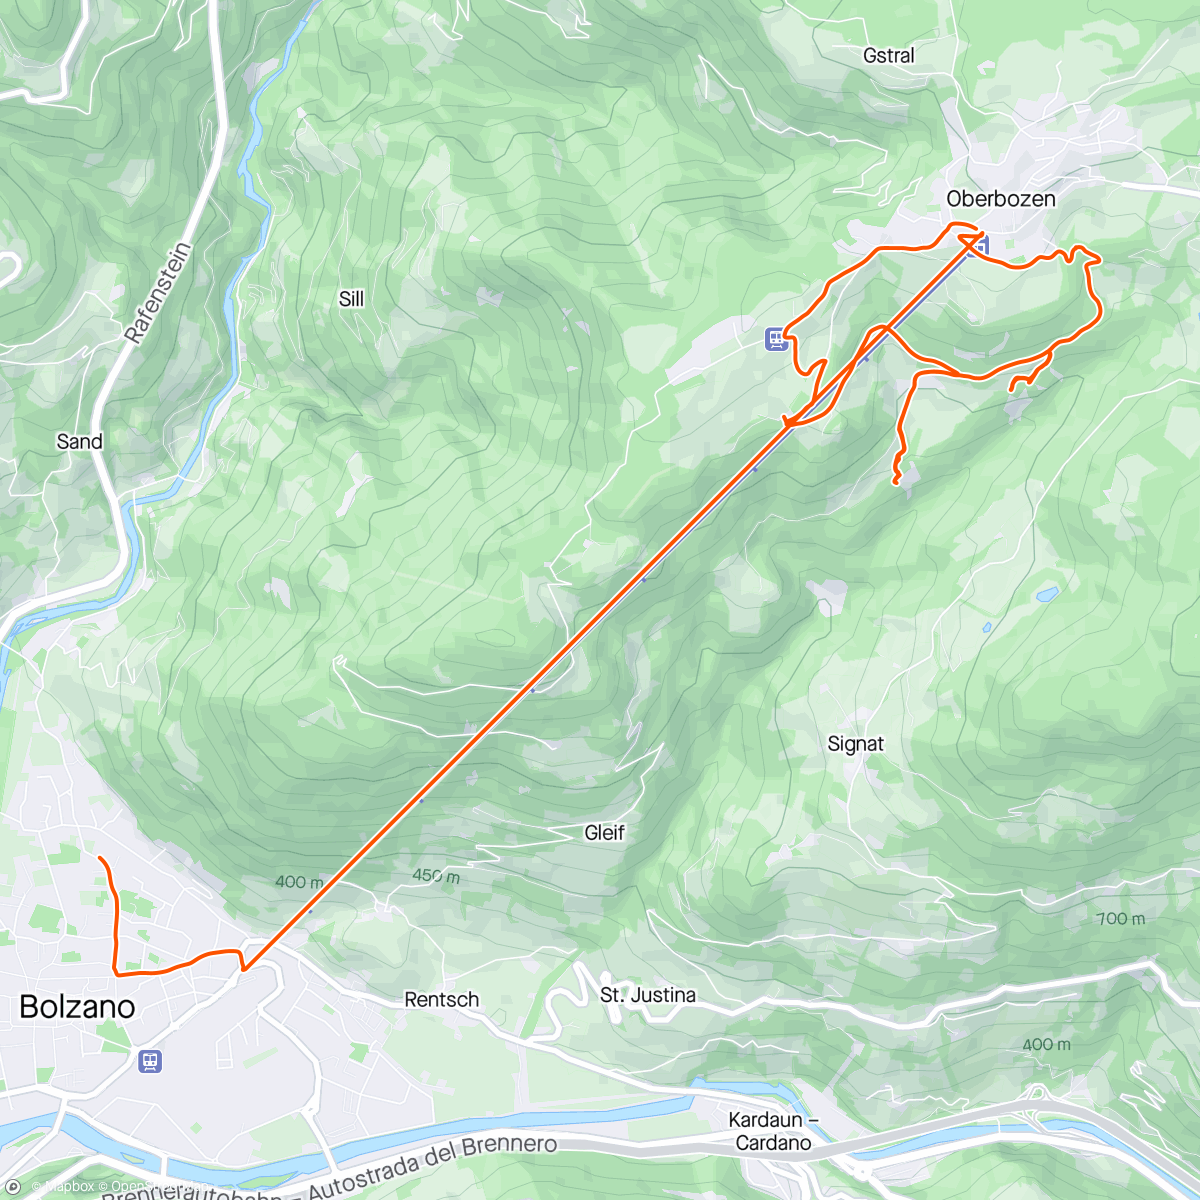 Map of the activity, Erdpyramiden Oberbozen